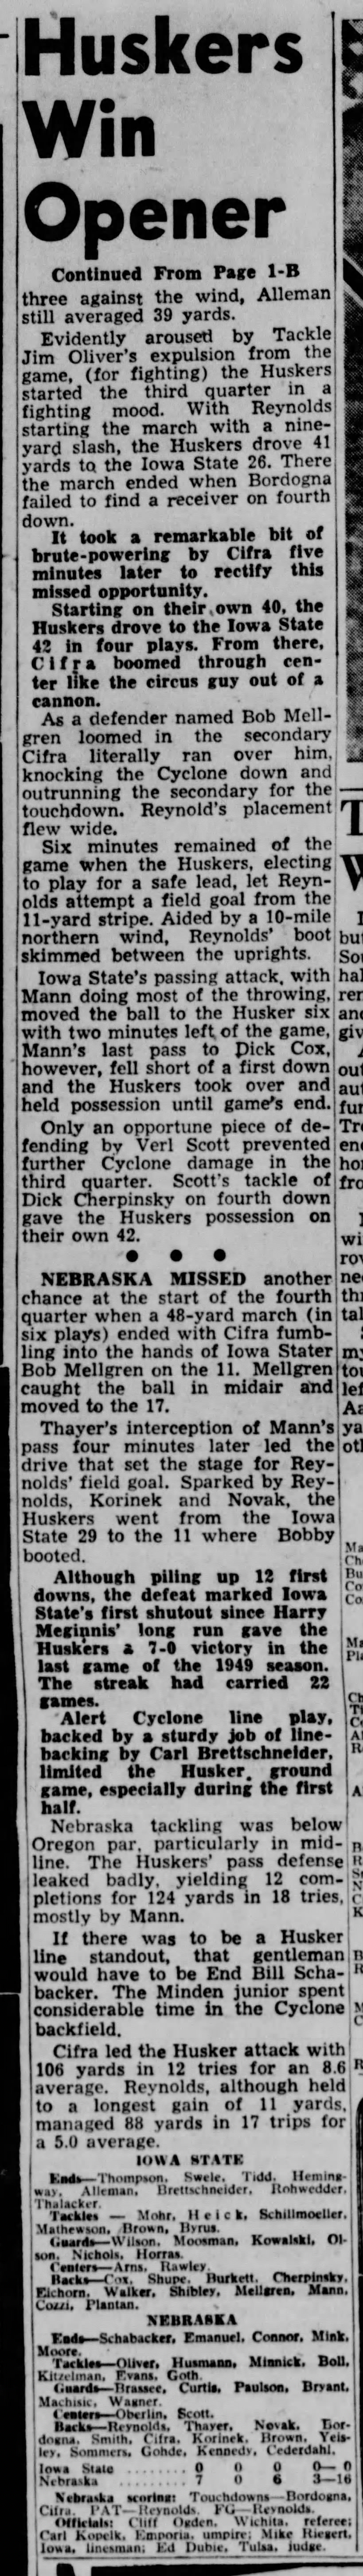 1952 Nebraska-Iowa State part 2